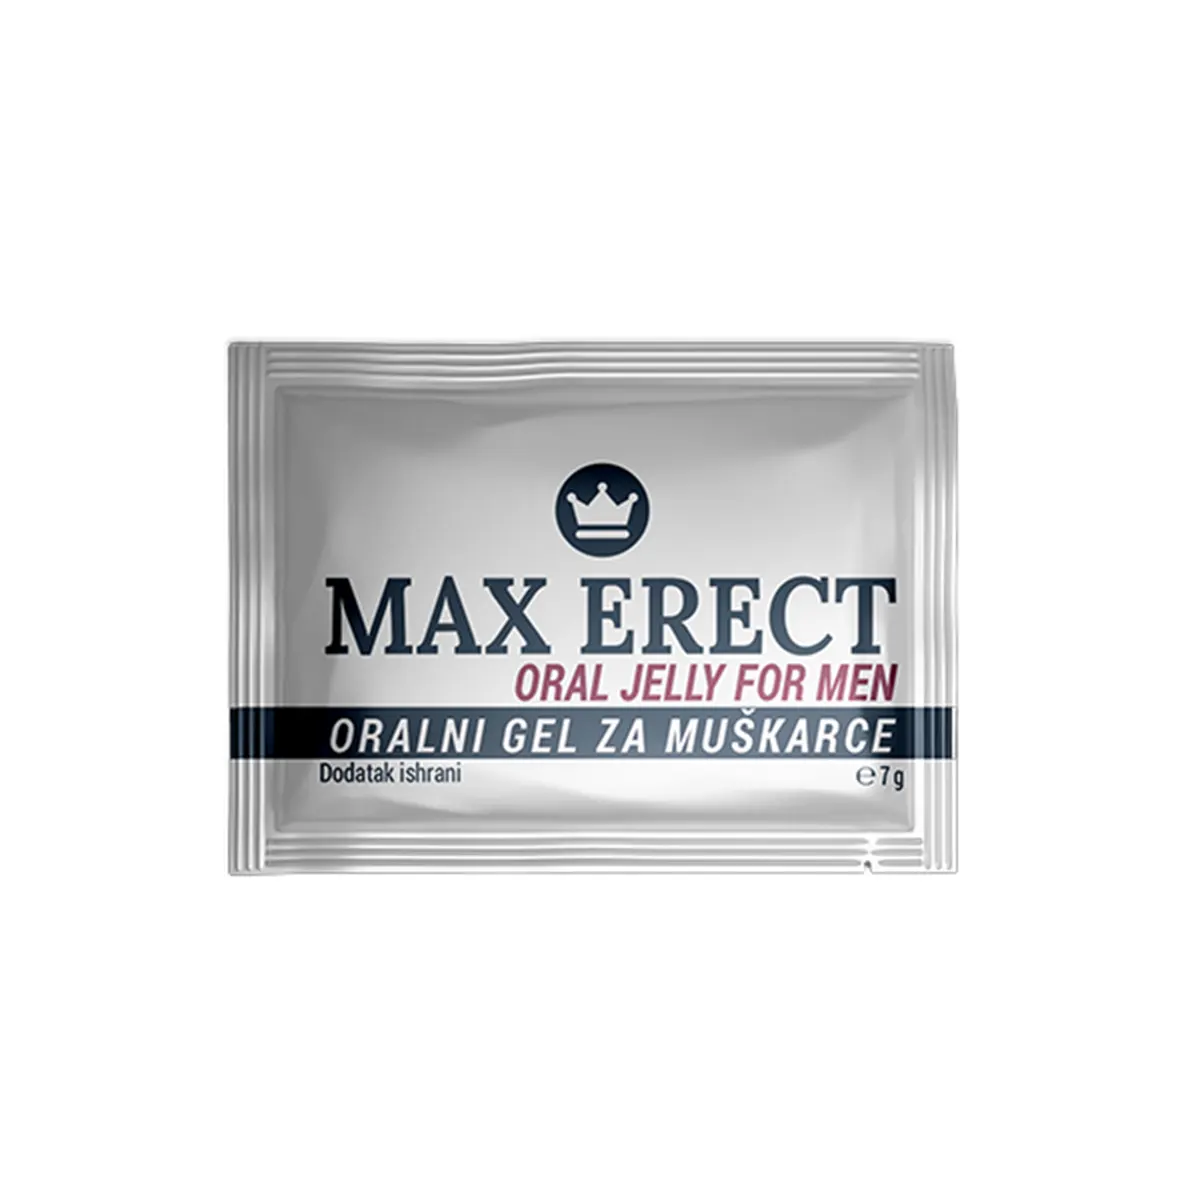 Max Erect